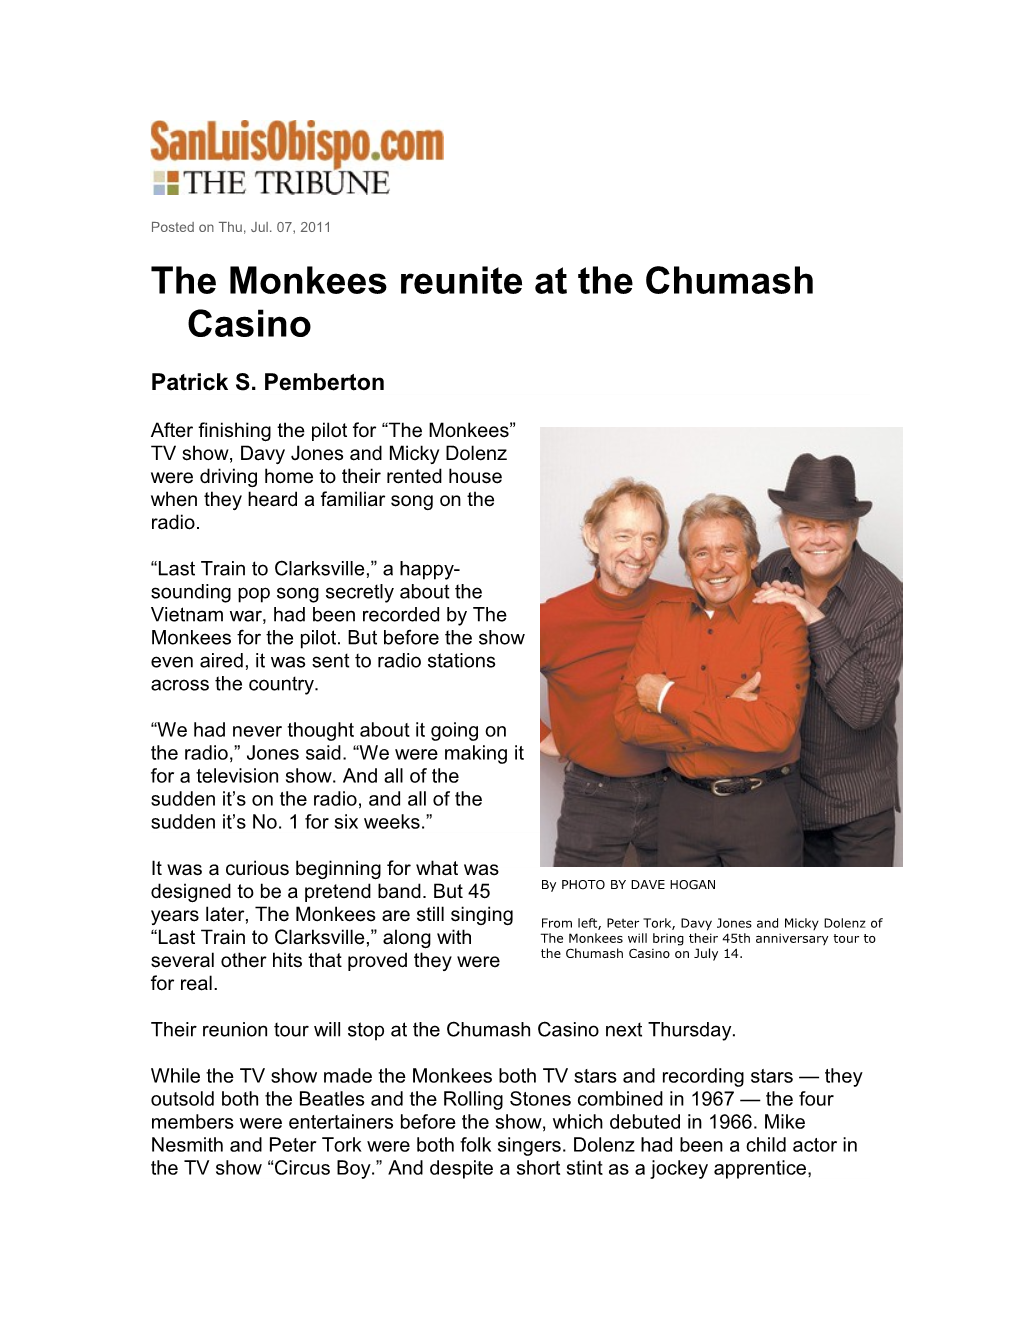 The Monkees Reunite at the Chumash Casino